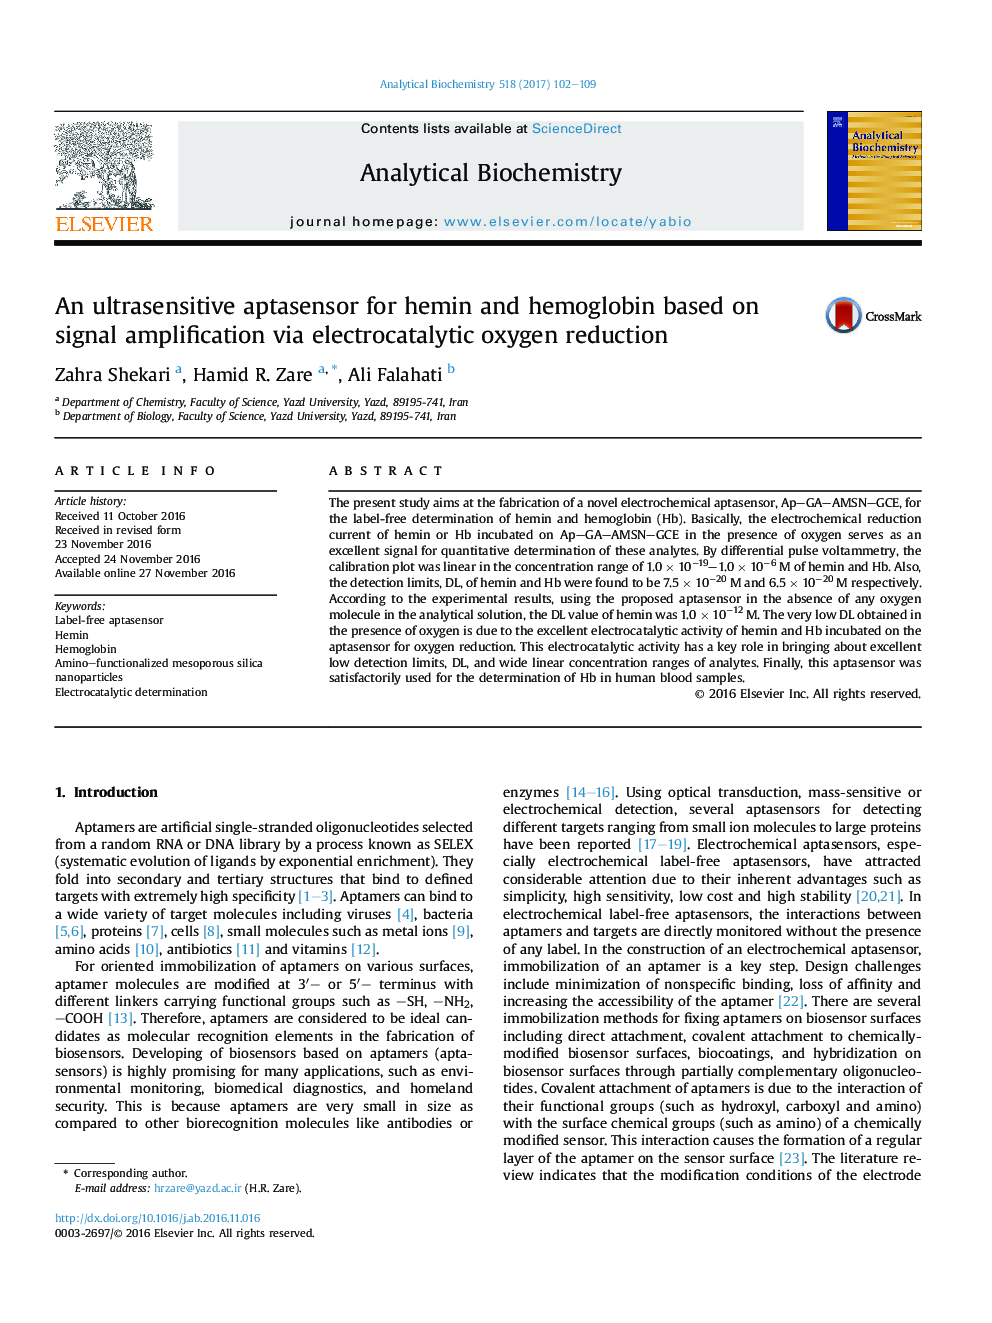 An ultrasensitive aptasensor for hemin and hemoglobin based on signal amplification via electrocatalytic oxygen reduction